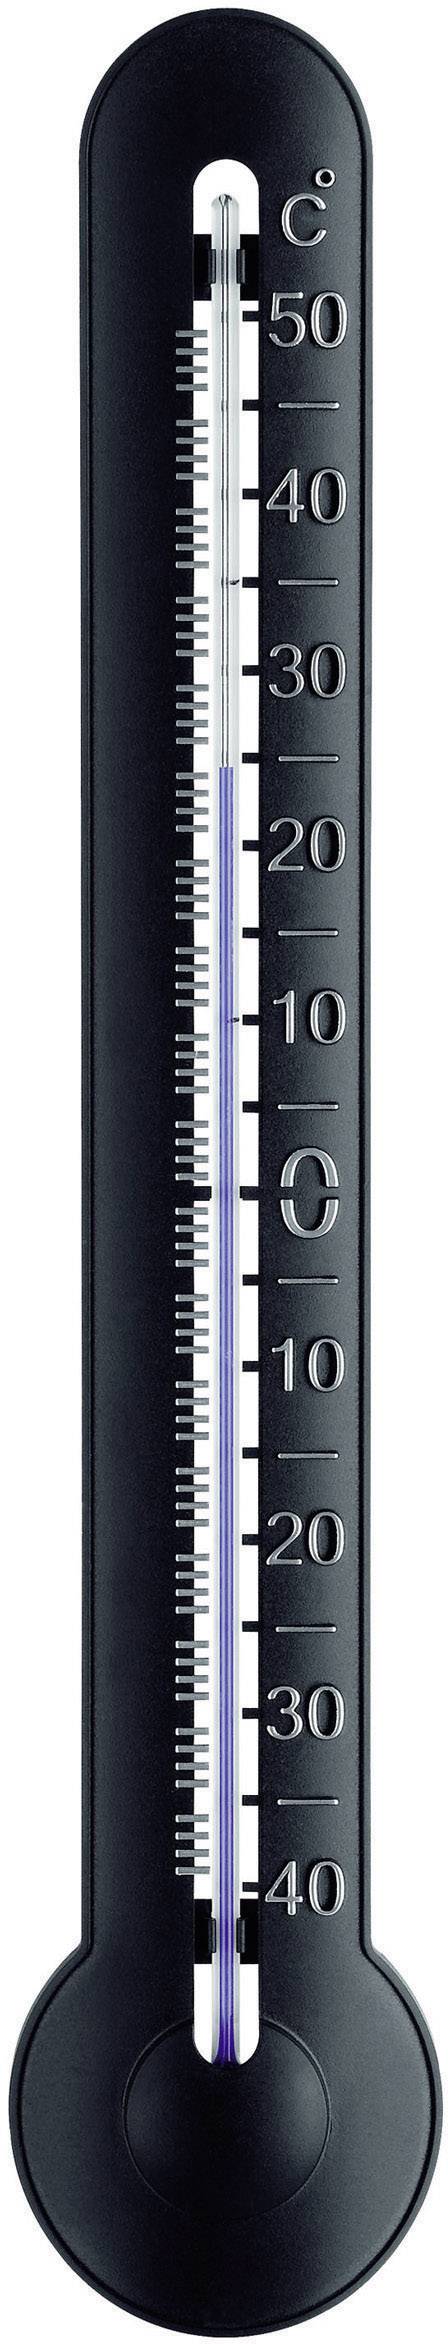 TFA-DOSTMANN Wand Thermometer TFA 12.3048 Schwarz